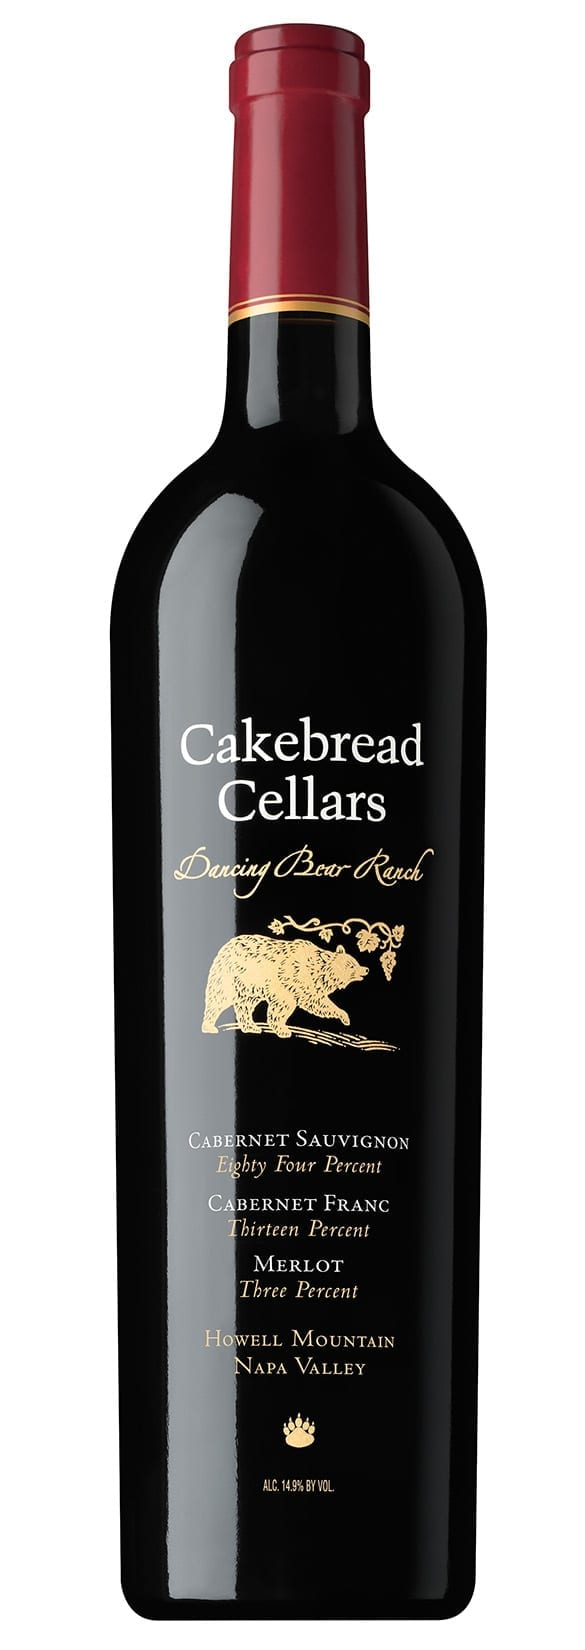 Cakebread Cellars Dancing Bear Ranch, red wine bottle, California, Napa Valley